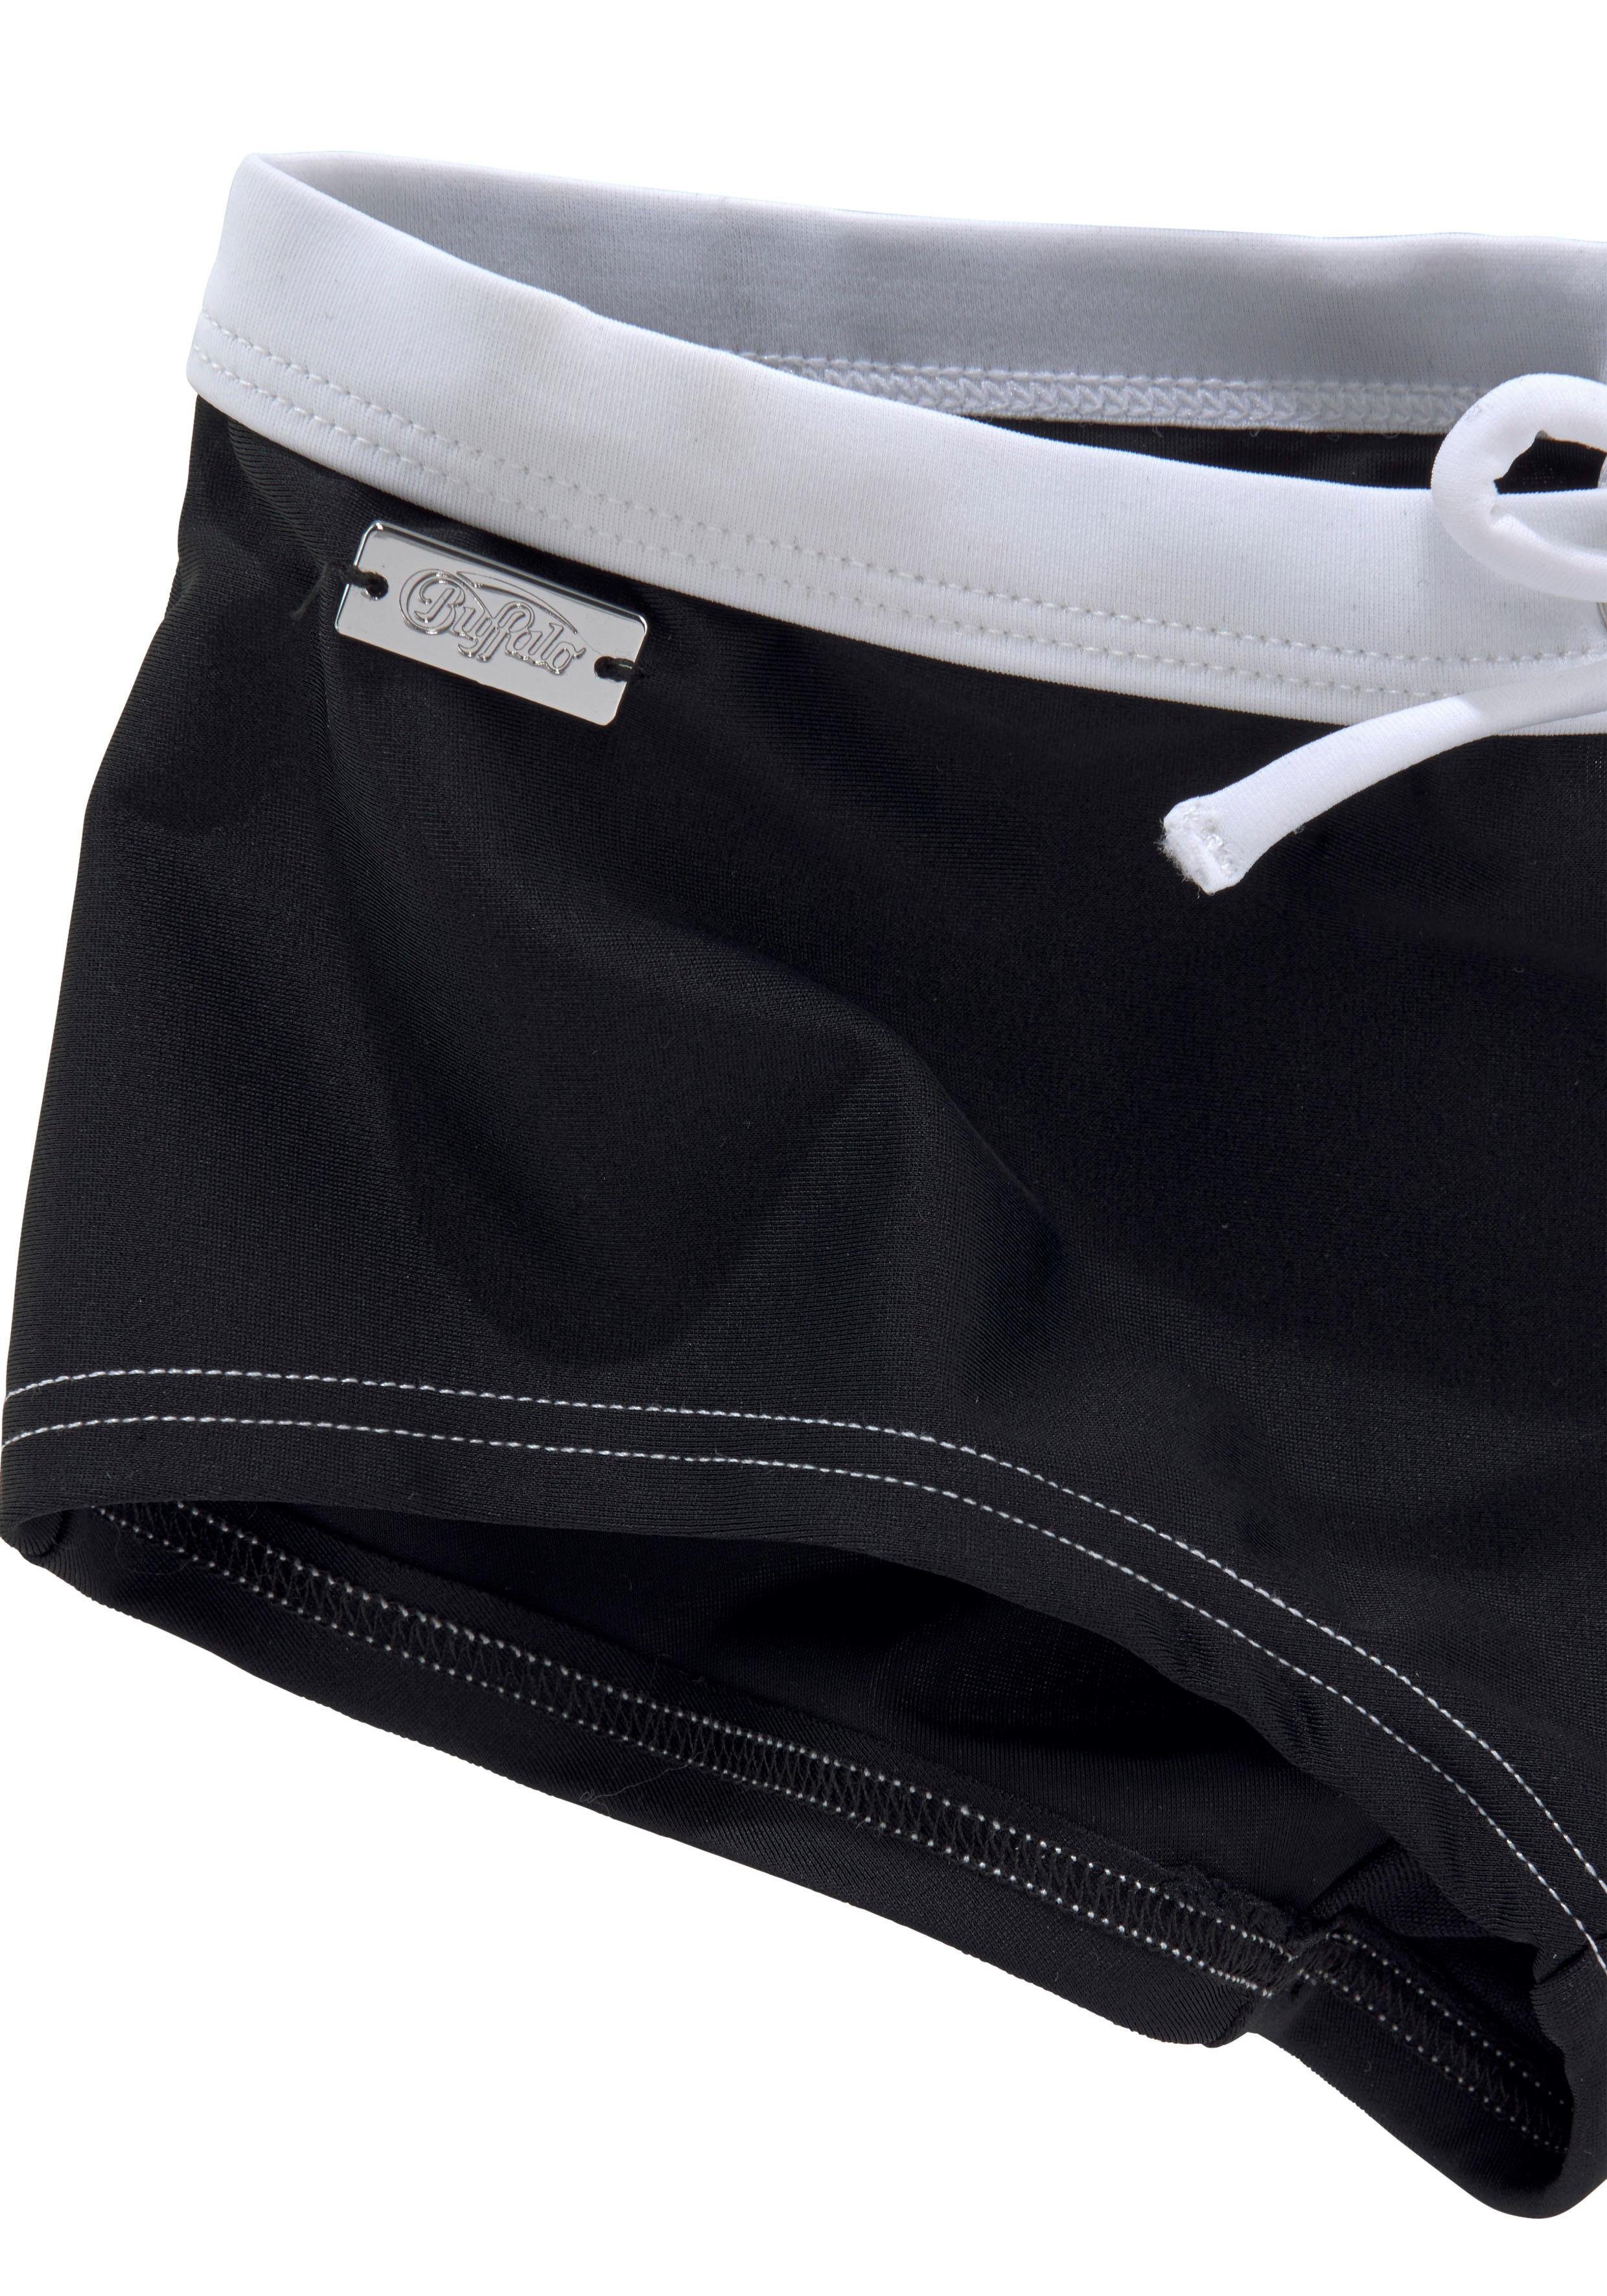 mit Triangel-Bikini schwarz-weiß Buffalo Hotpants trendiger